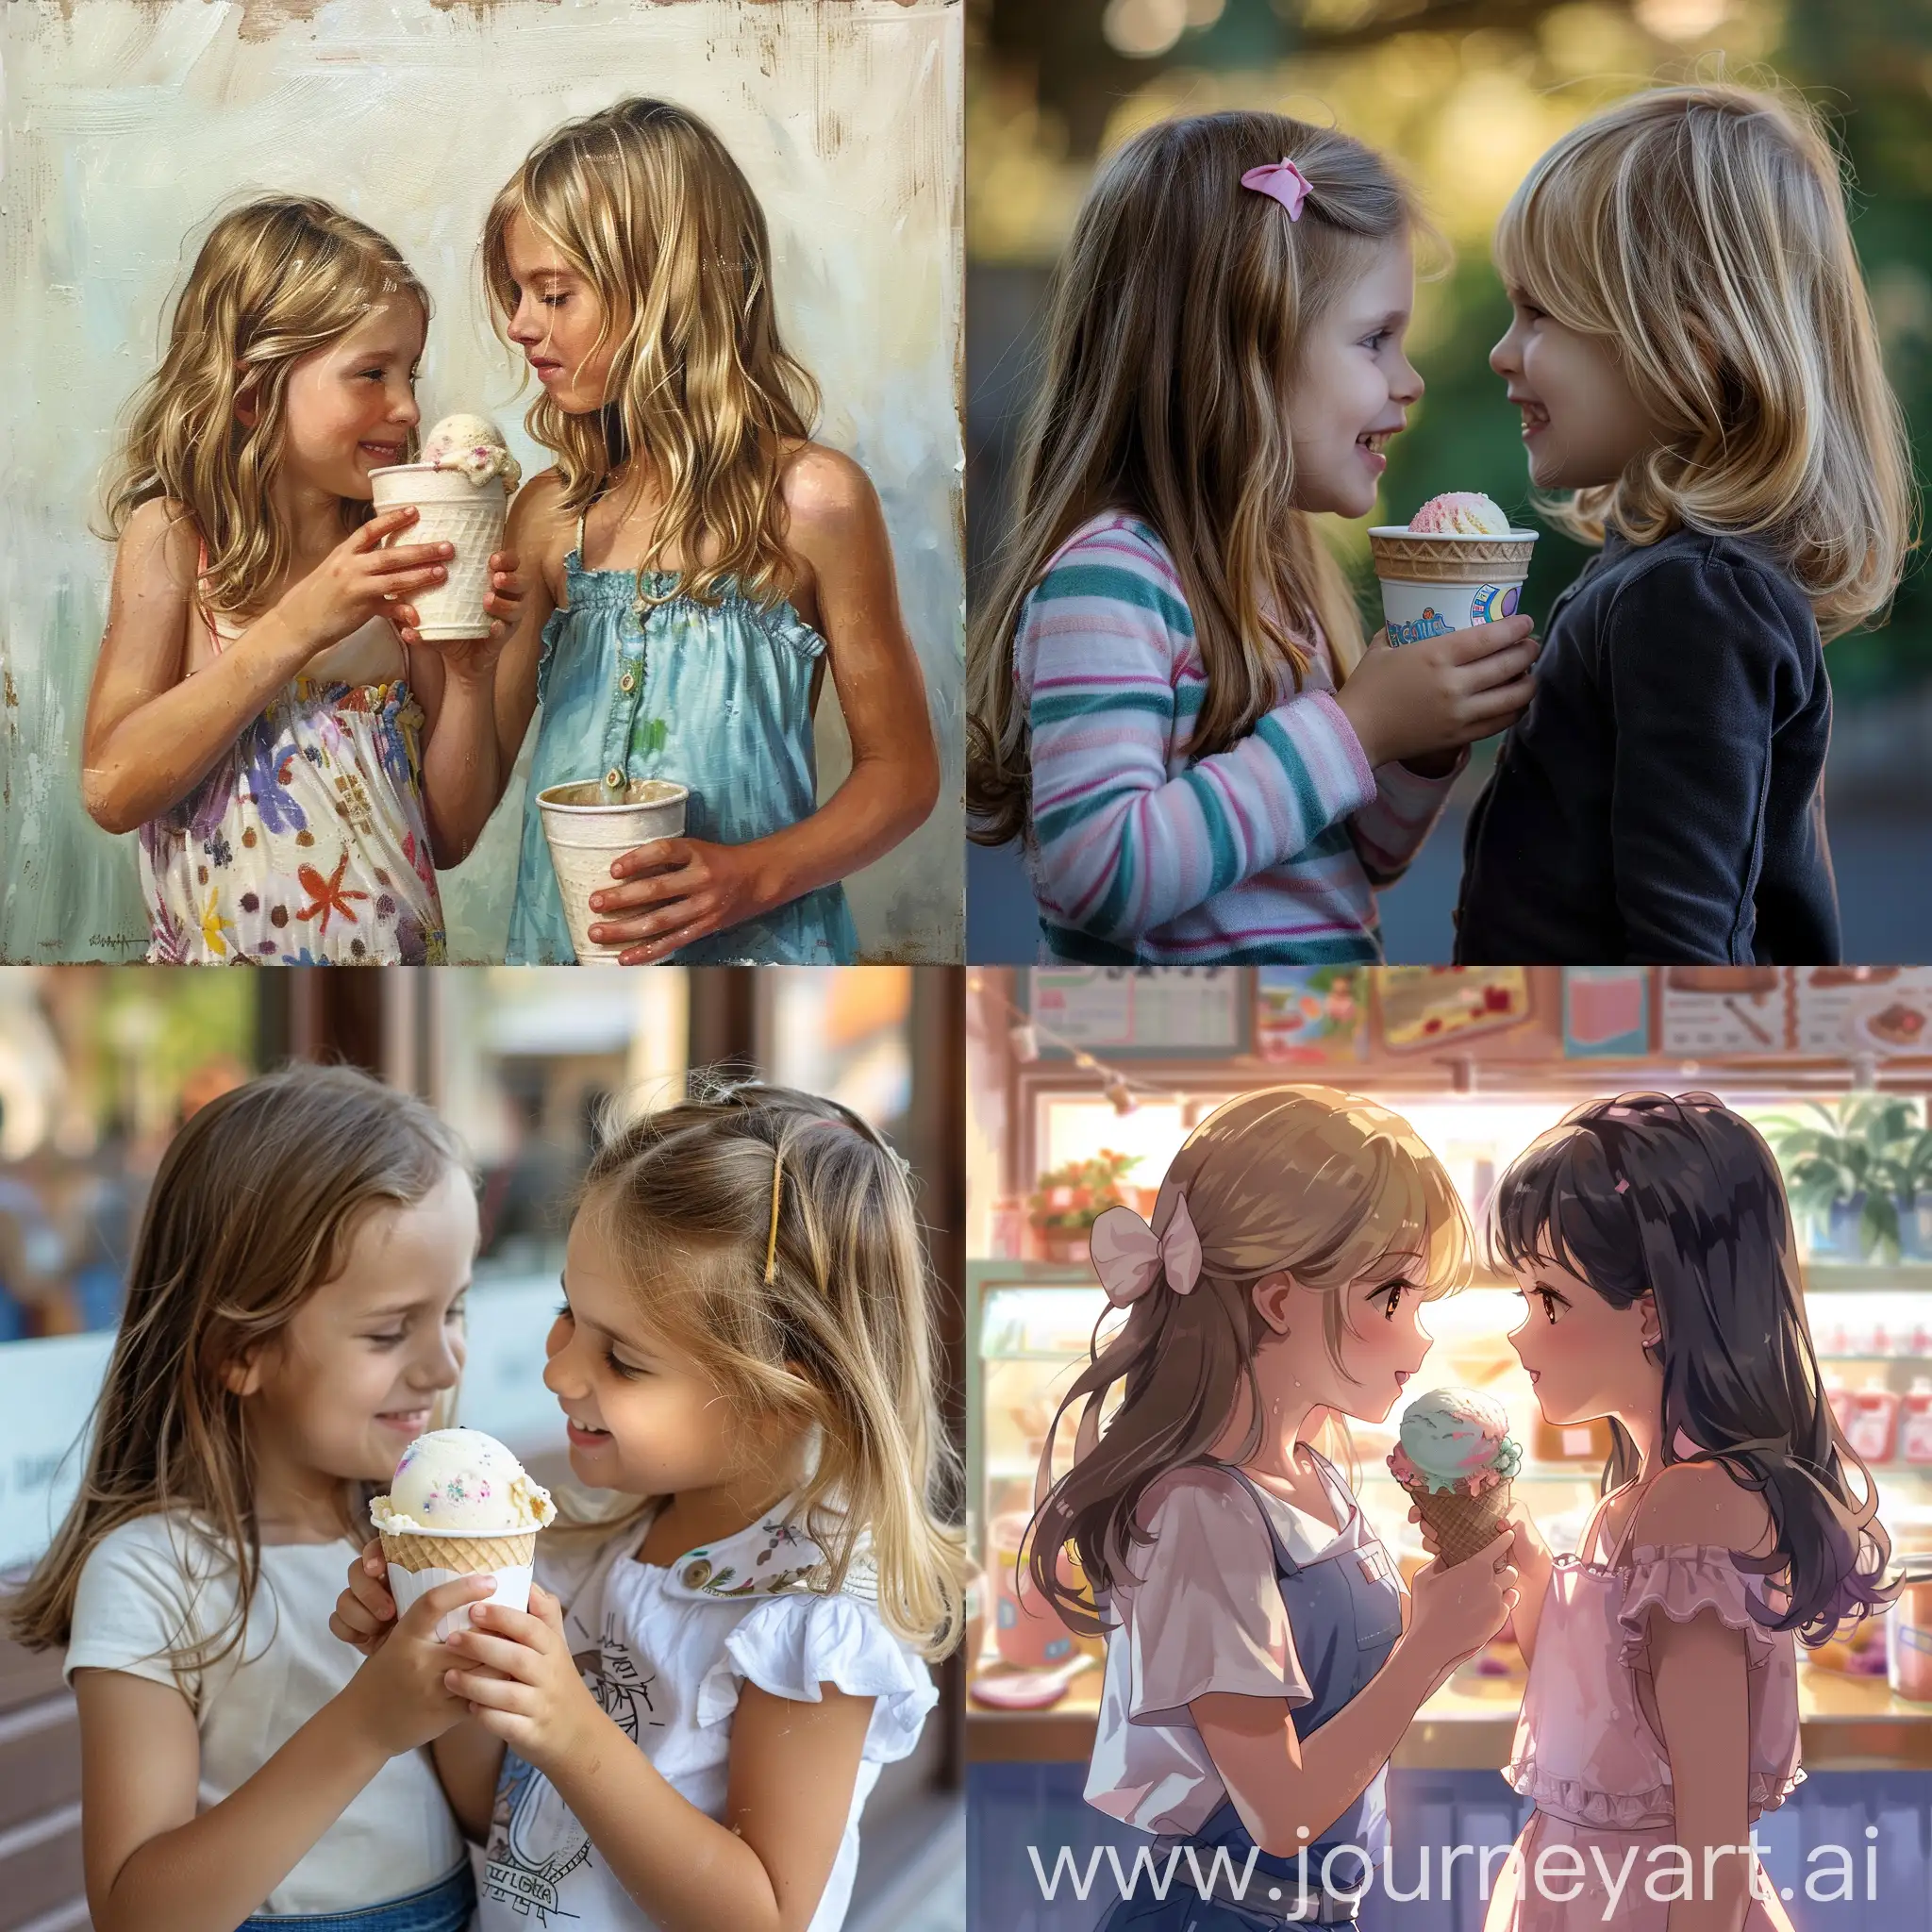 2 girls sharing ice cream cup